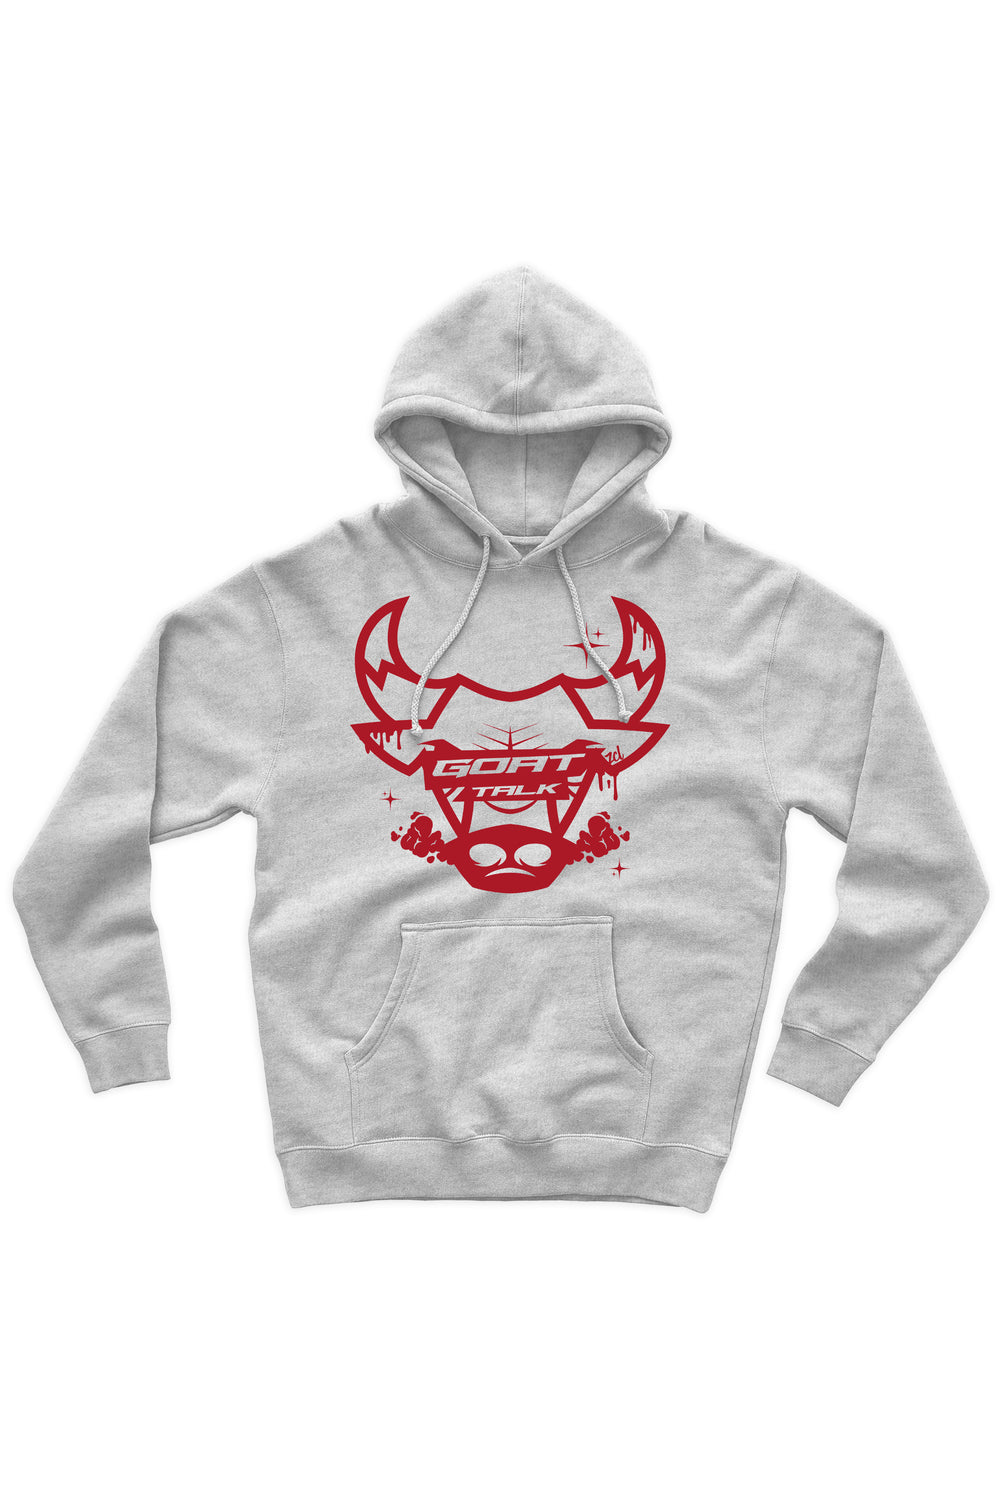 Goat Talk Hoodie (Red Logo) - Zamage